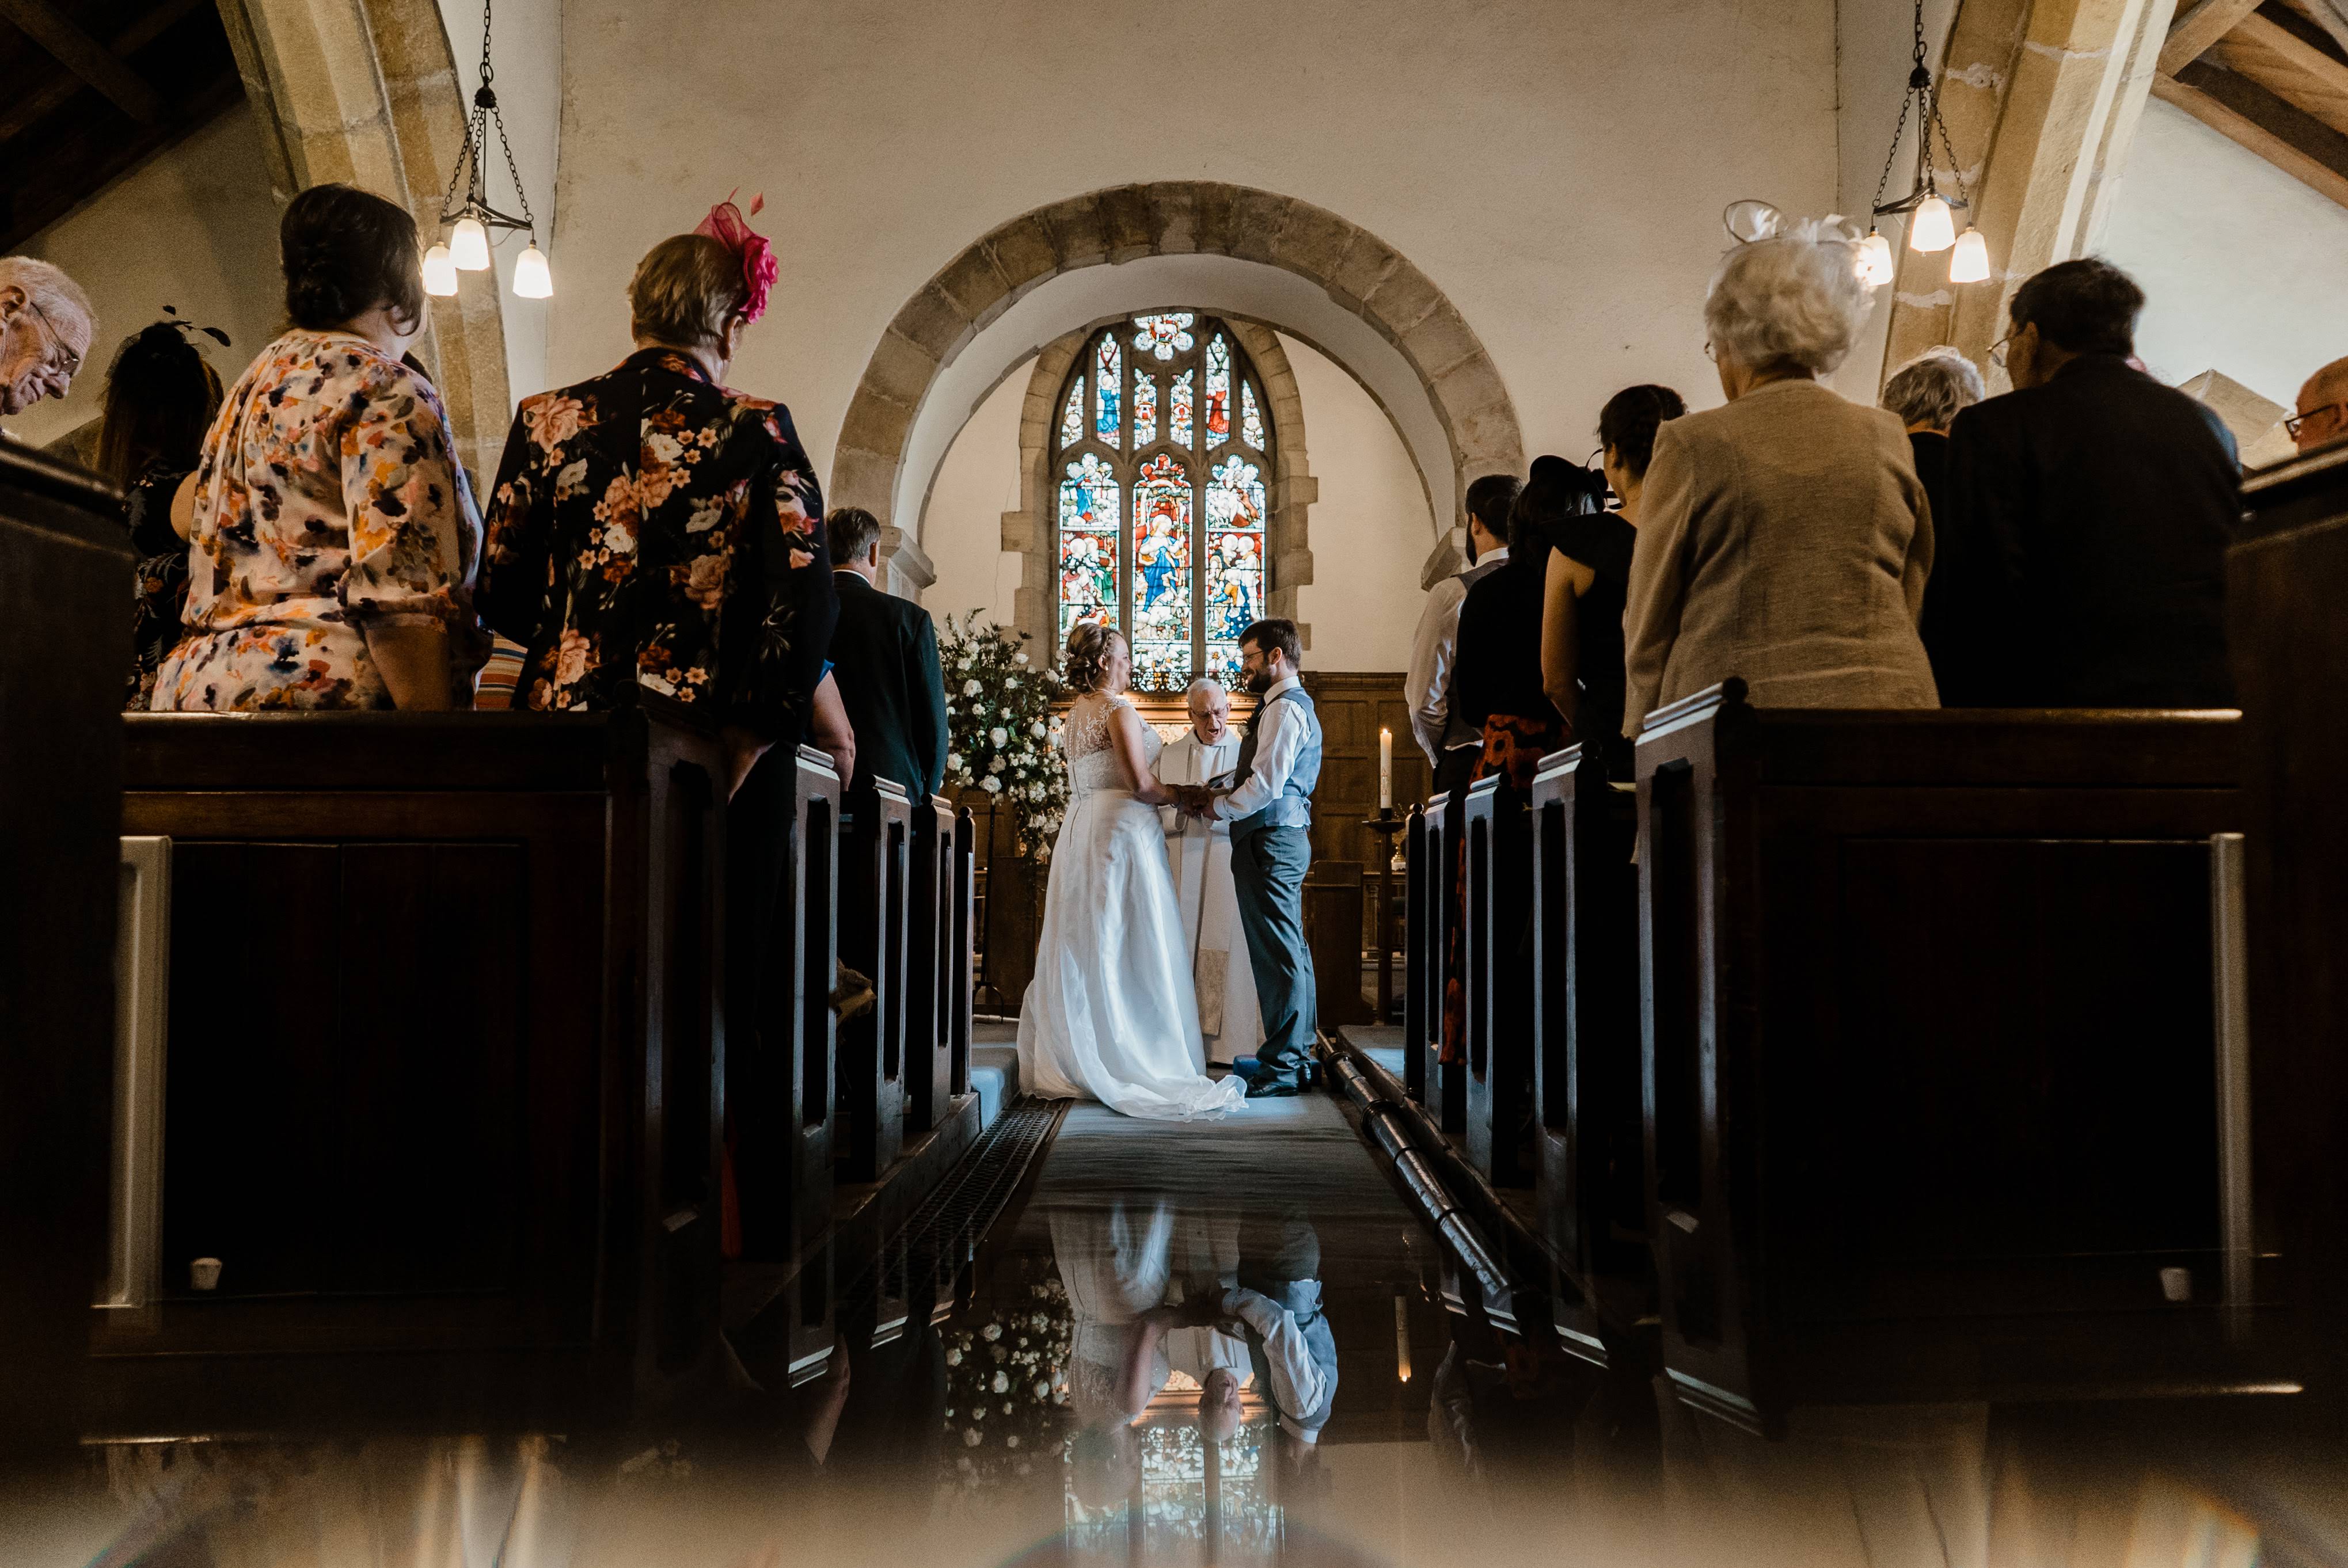 Wedding taking place, reflection at bottom